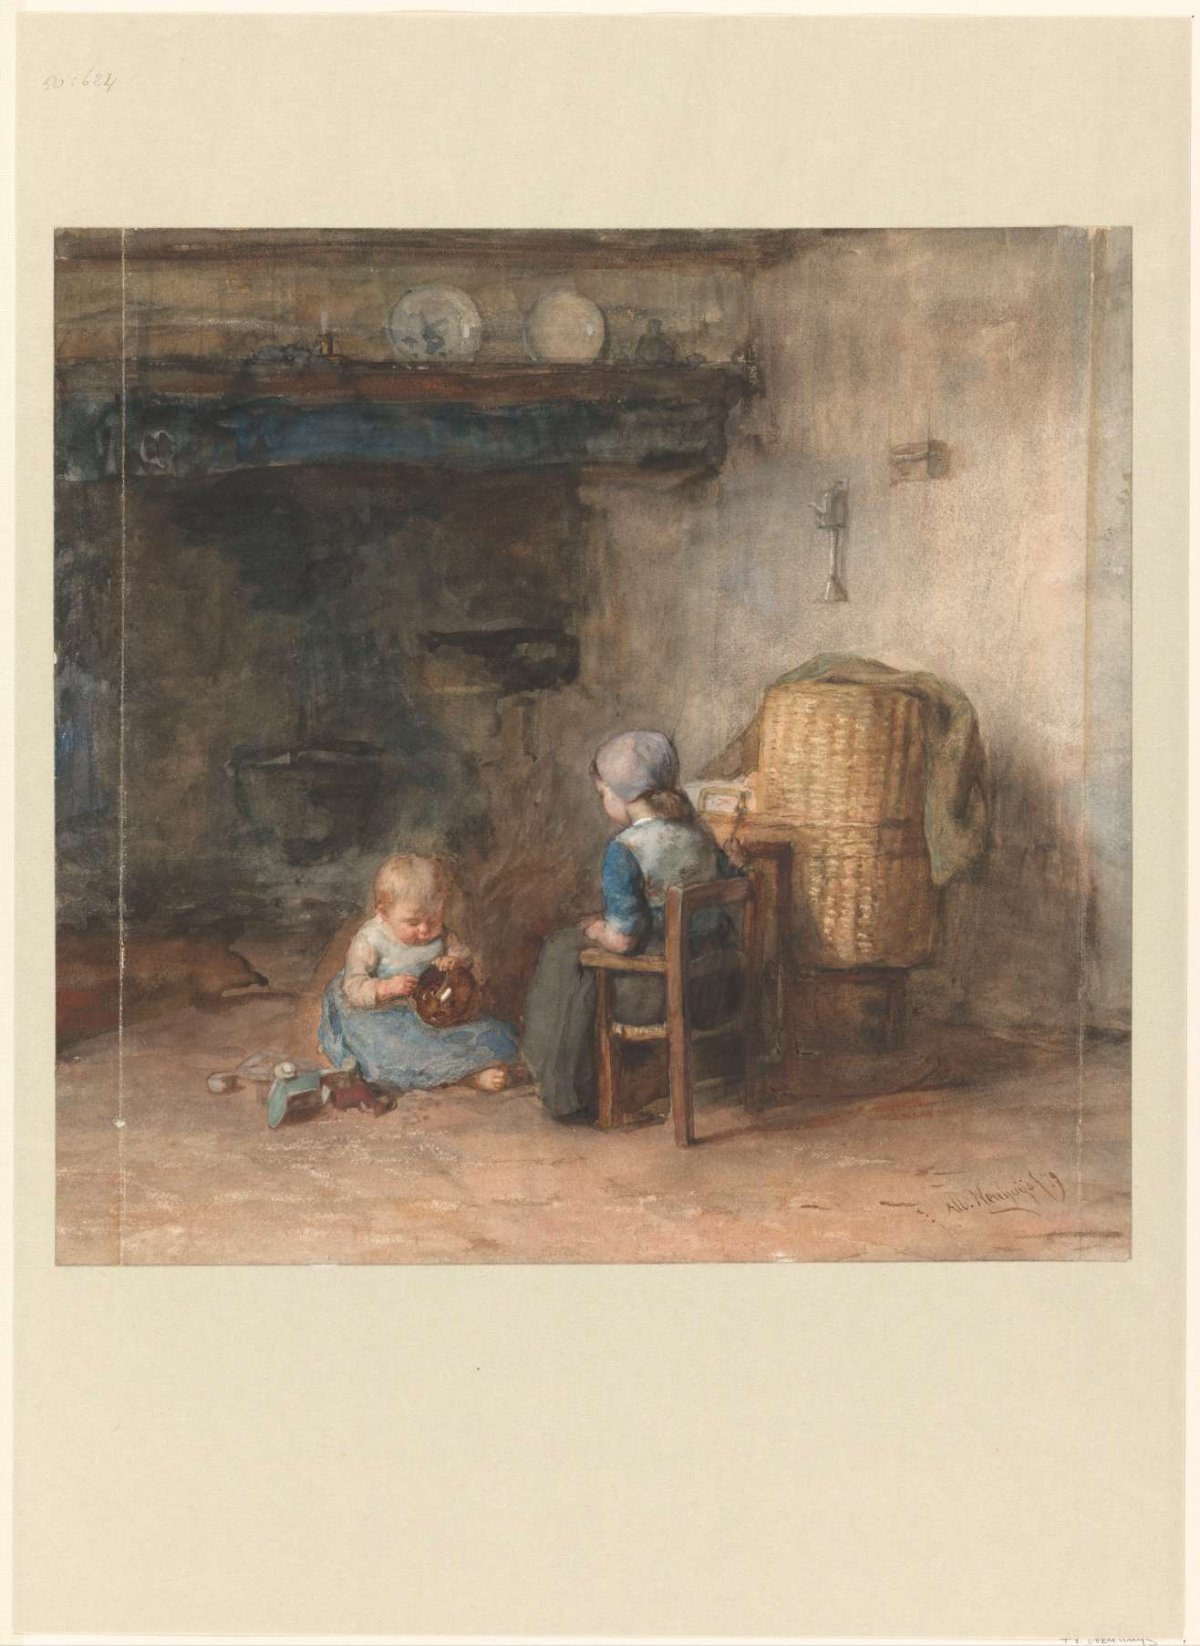 Two children in a peasant interior, Albert Neuhuys (1844-1914), 1879